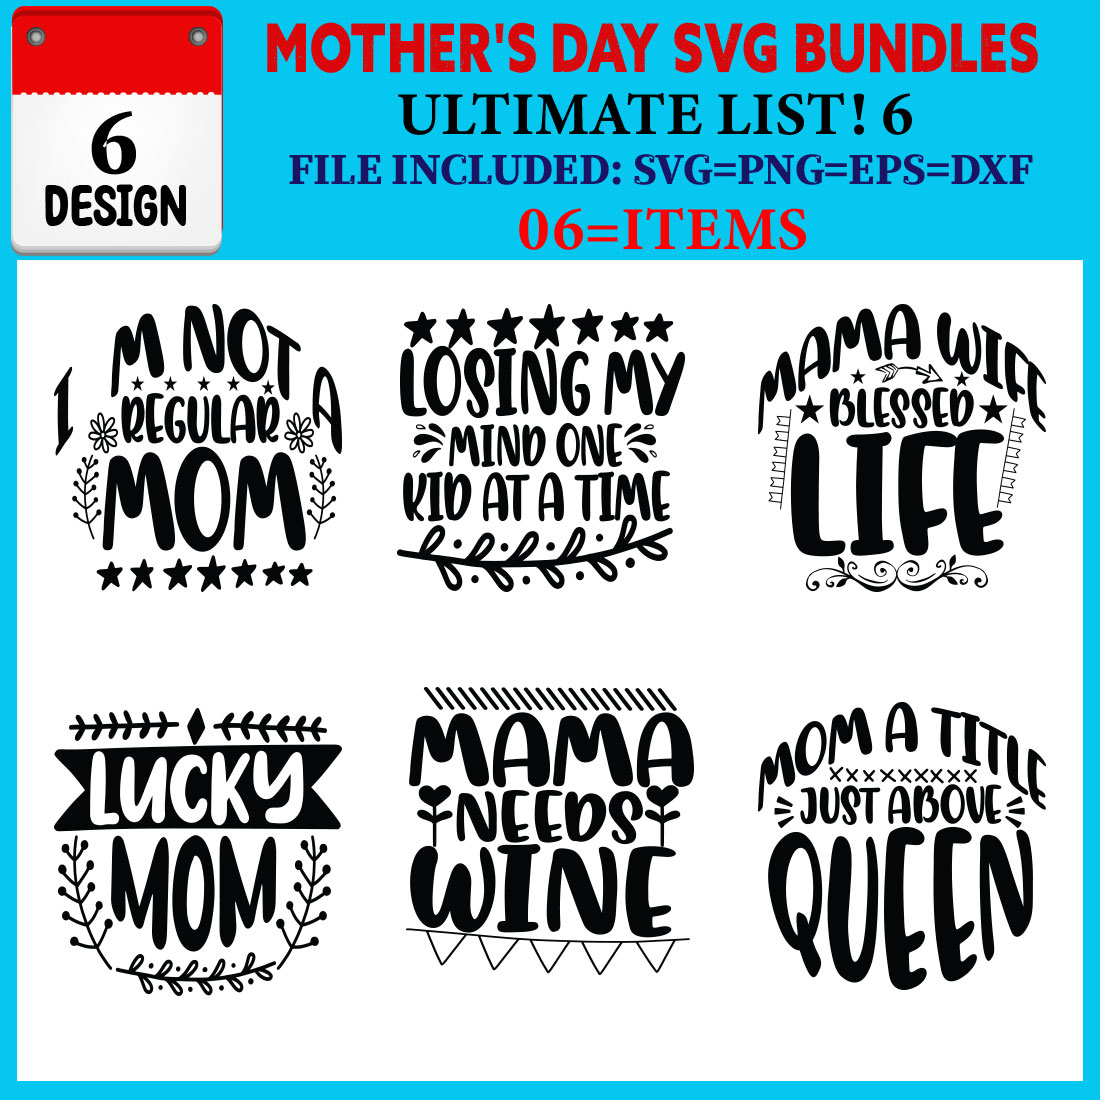 Mother's Day T-shirt Design Bundle Vol-26 cover image.